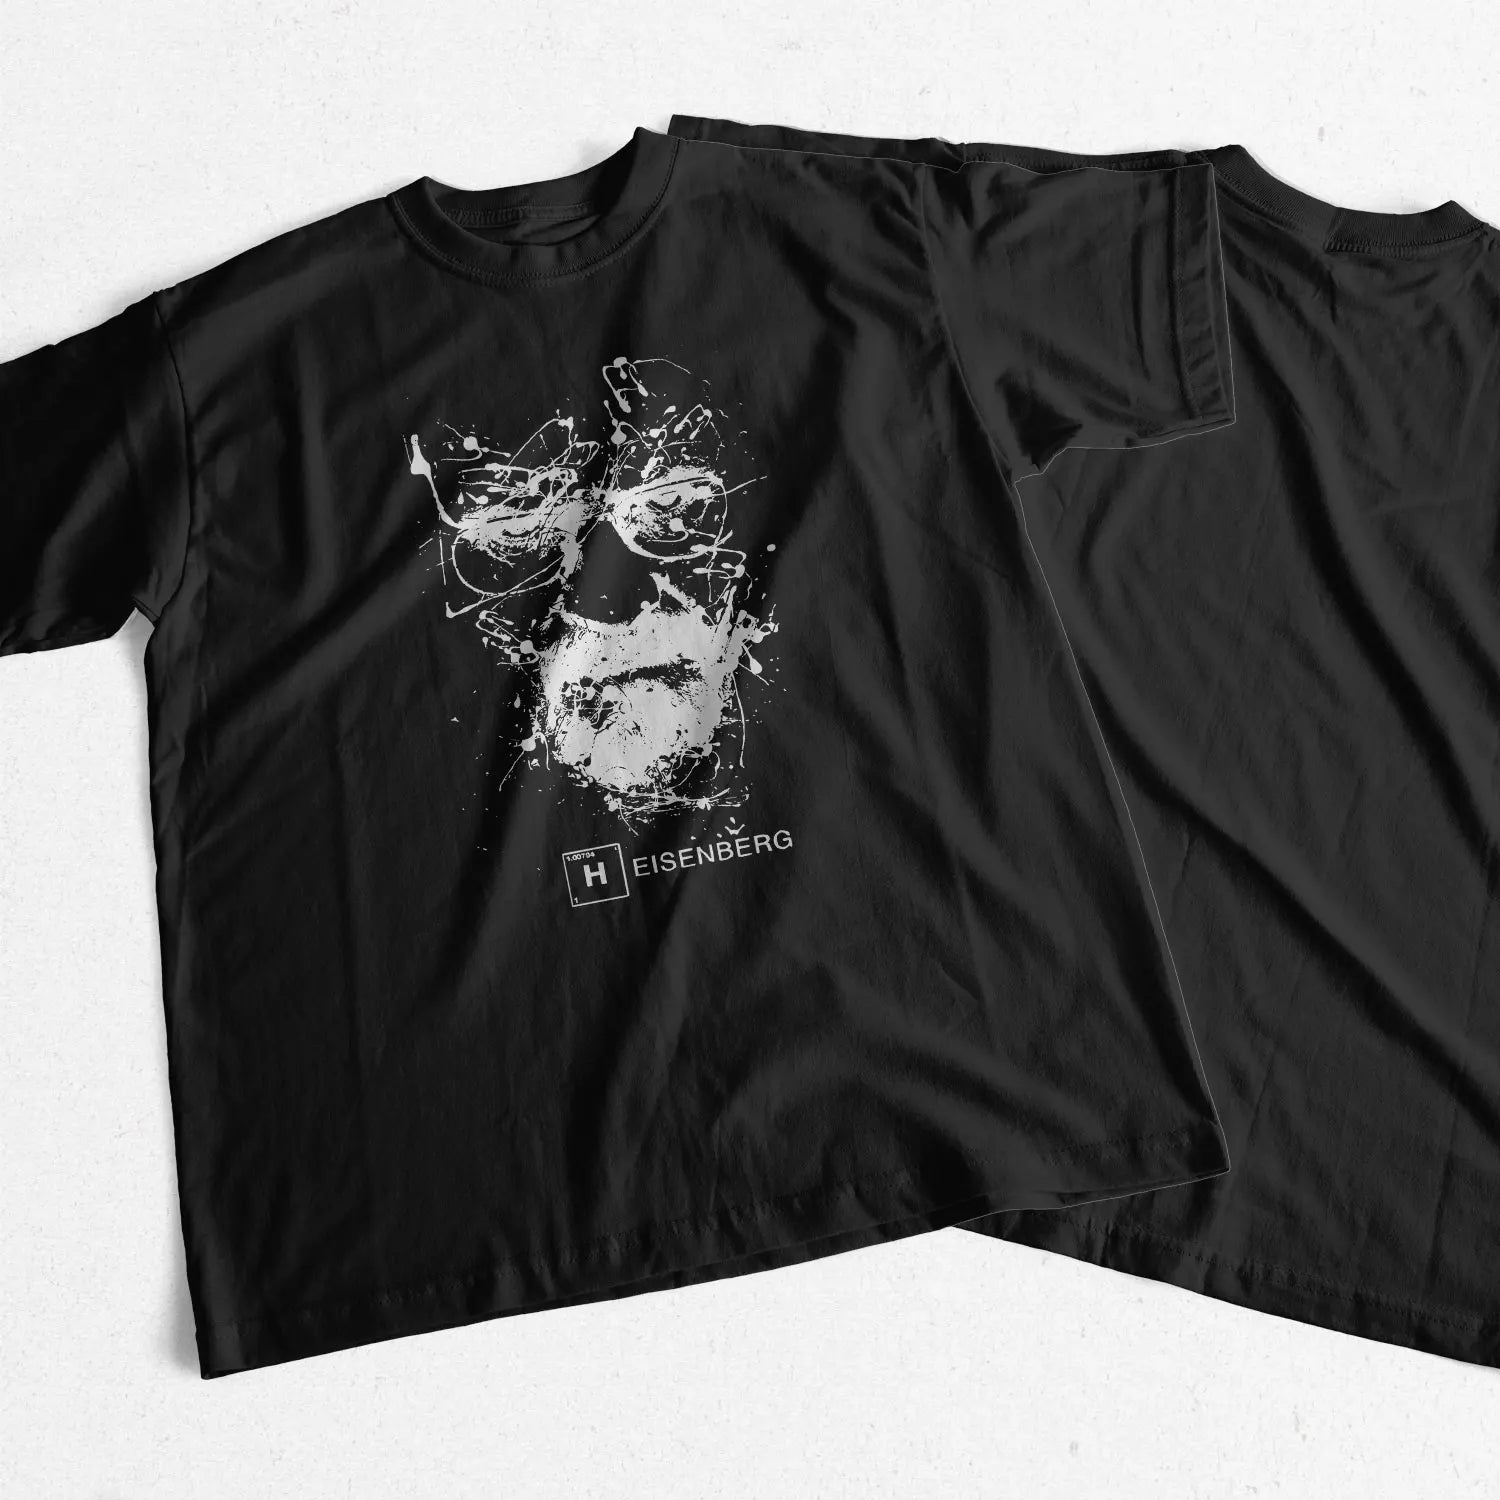 Black t-shirt with an ink splatter image of Walter White AKA Heisenberg